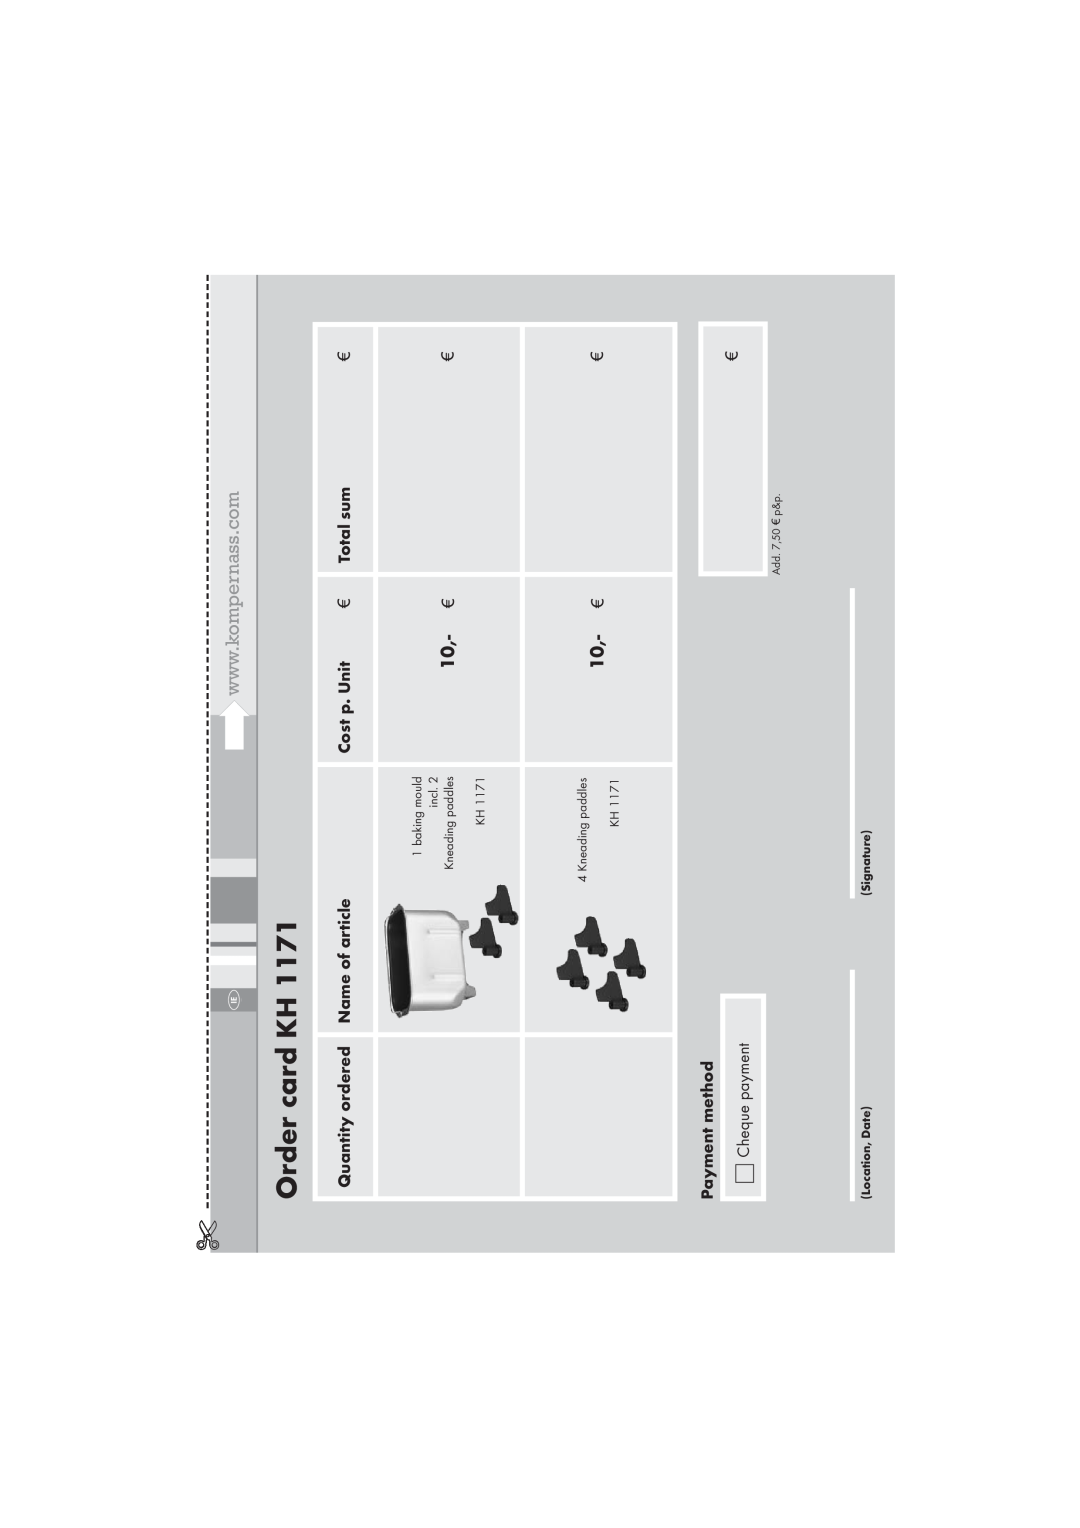 Kompernass KH 1171 manual Order card KH, 10,- €, Add. 7,50 € p&p 